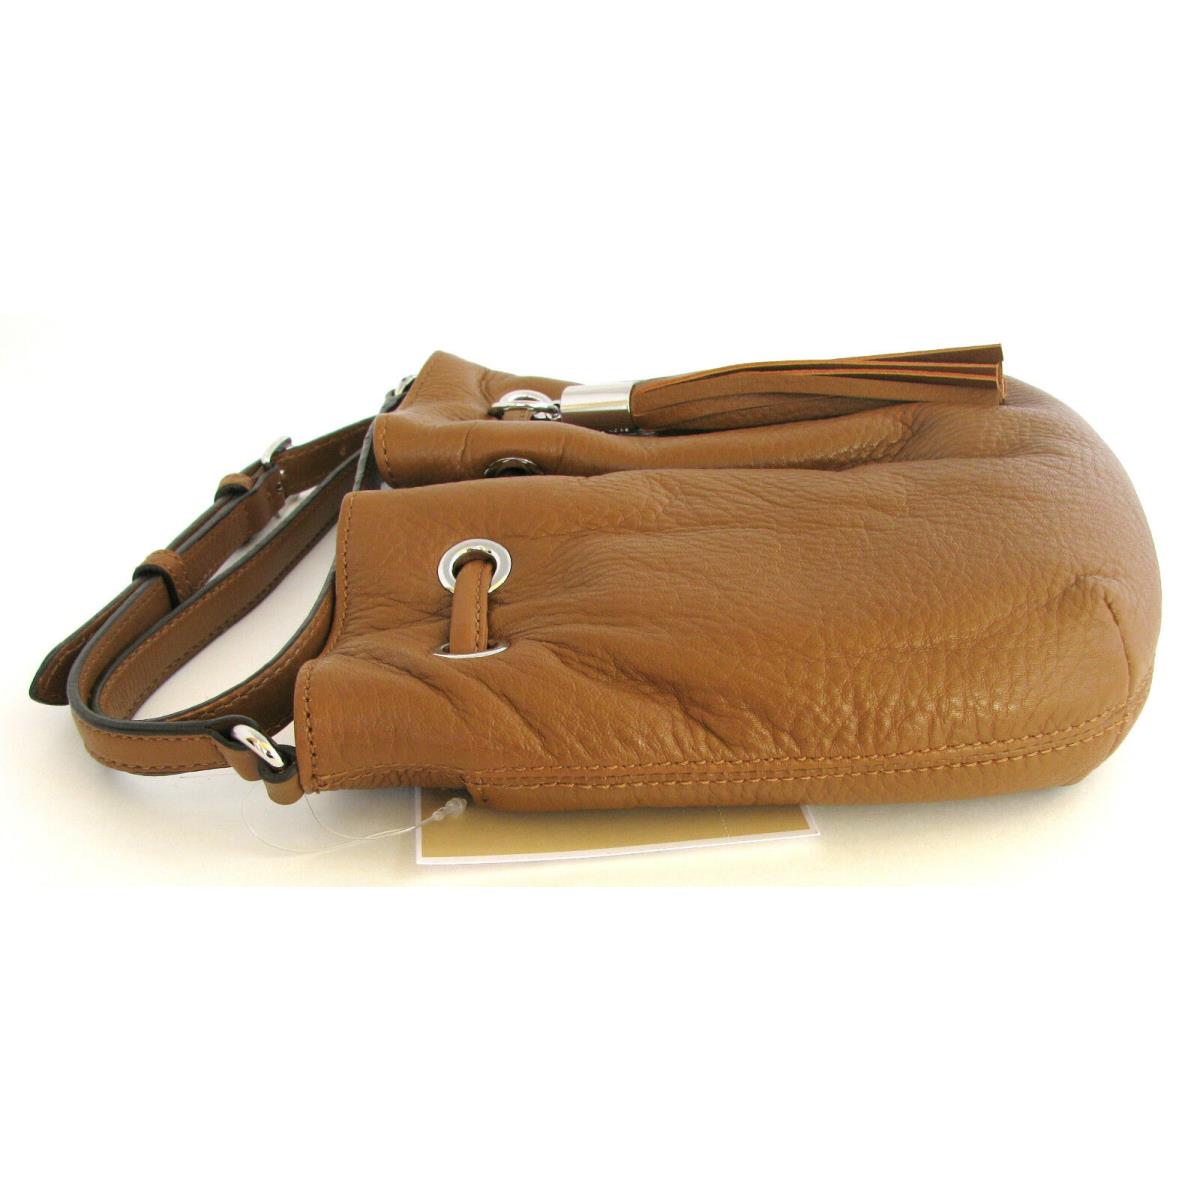 Michael Kors Silver Luggage Brown Leather Ring Tote Crossbody Handbag+tag